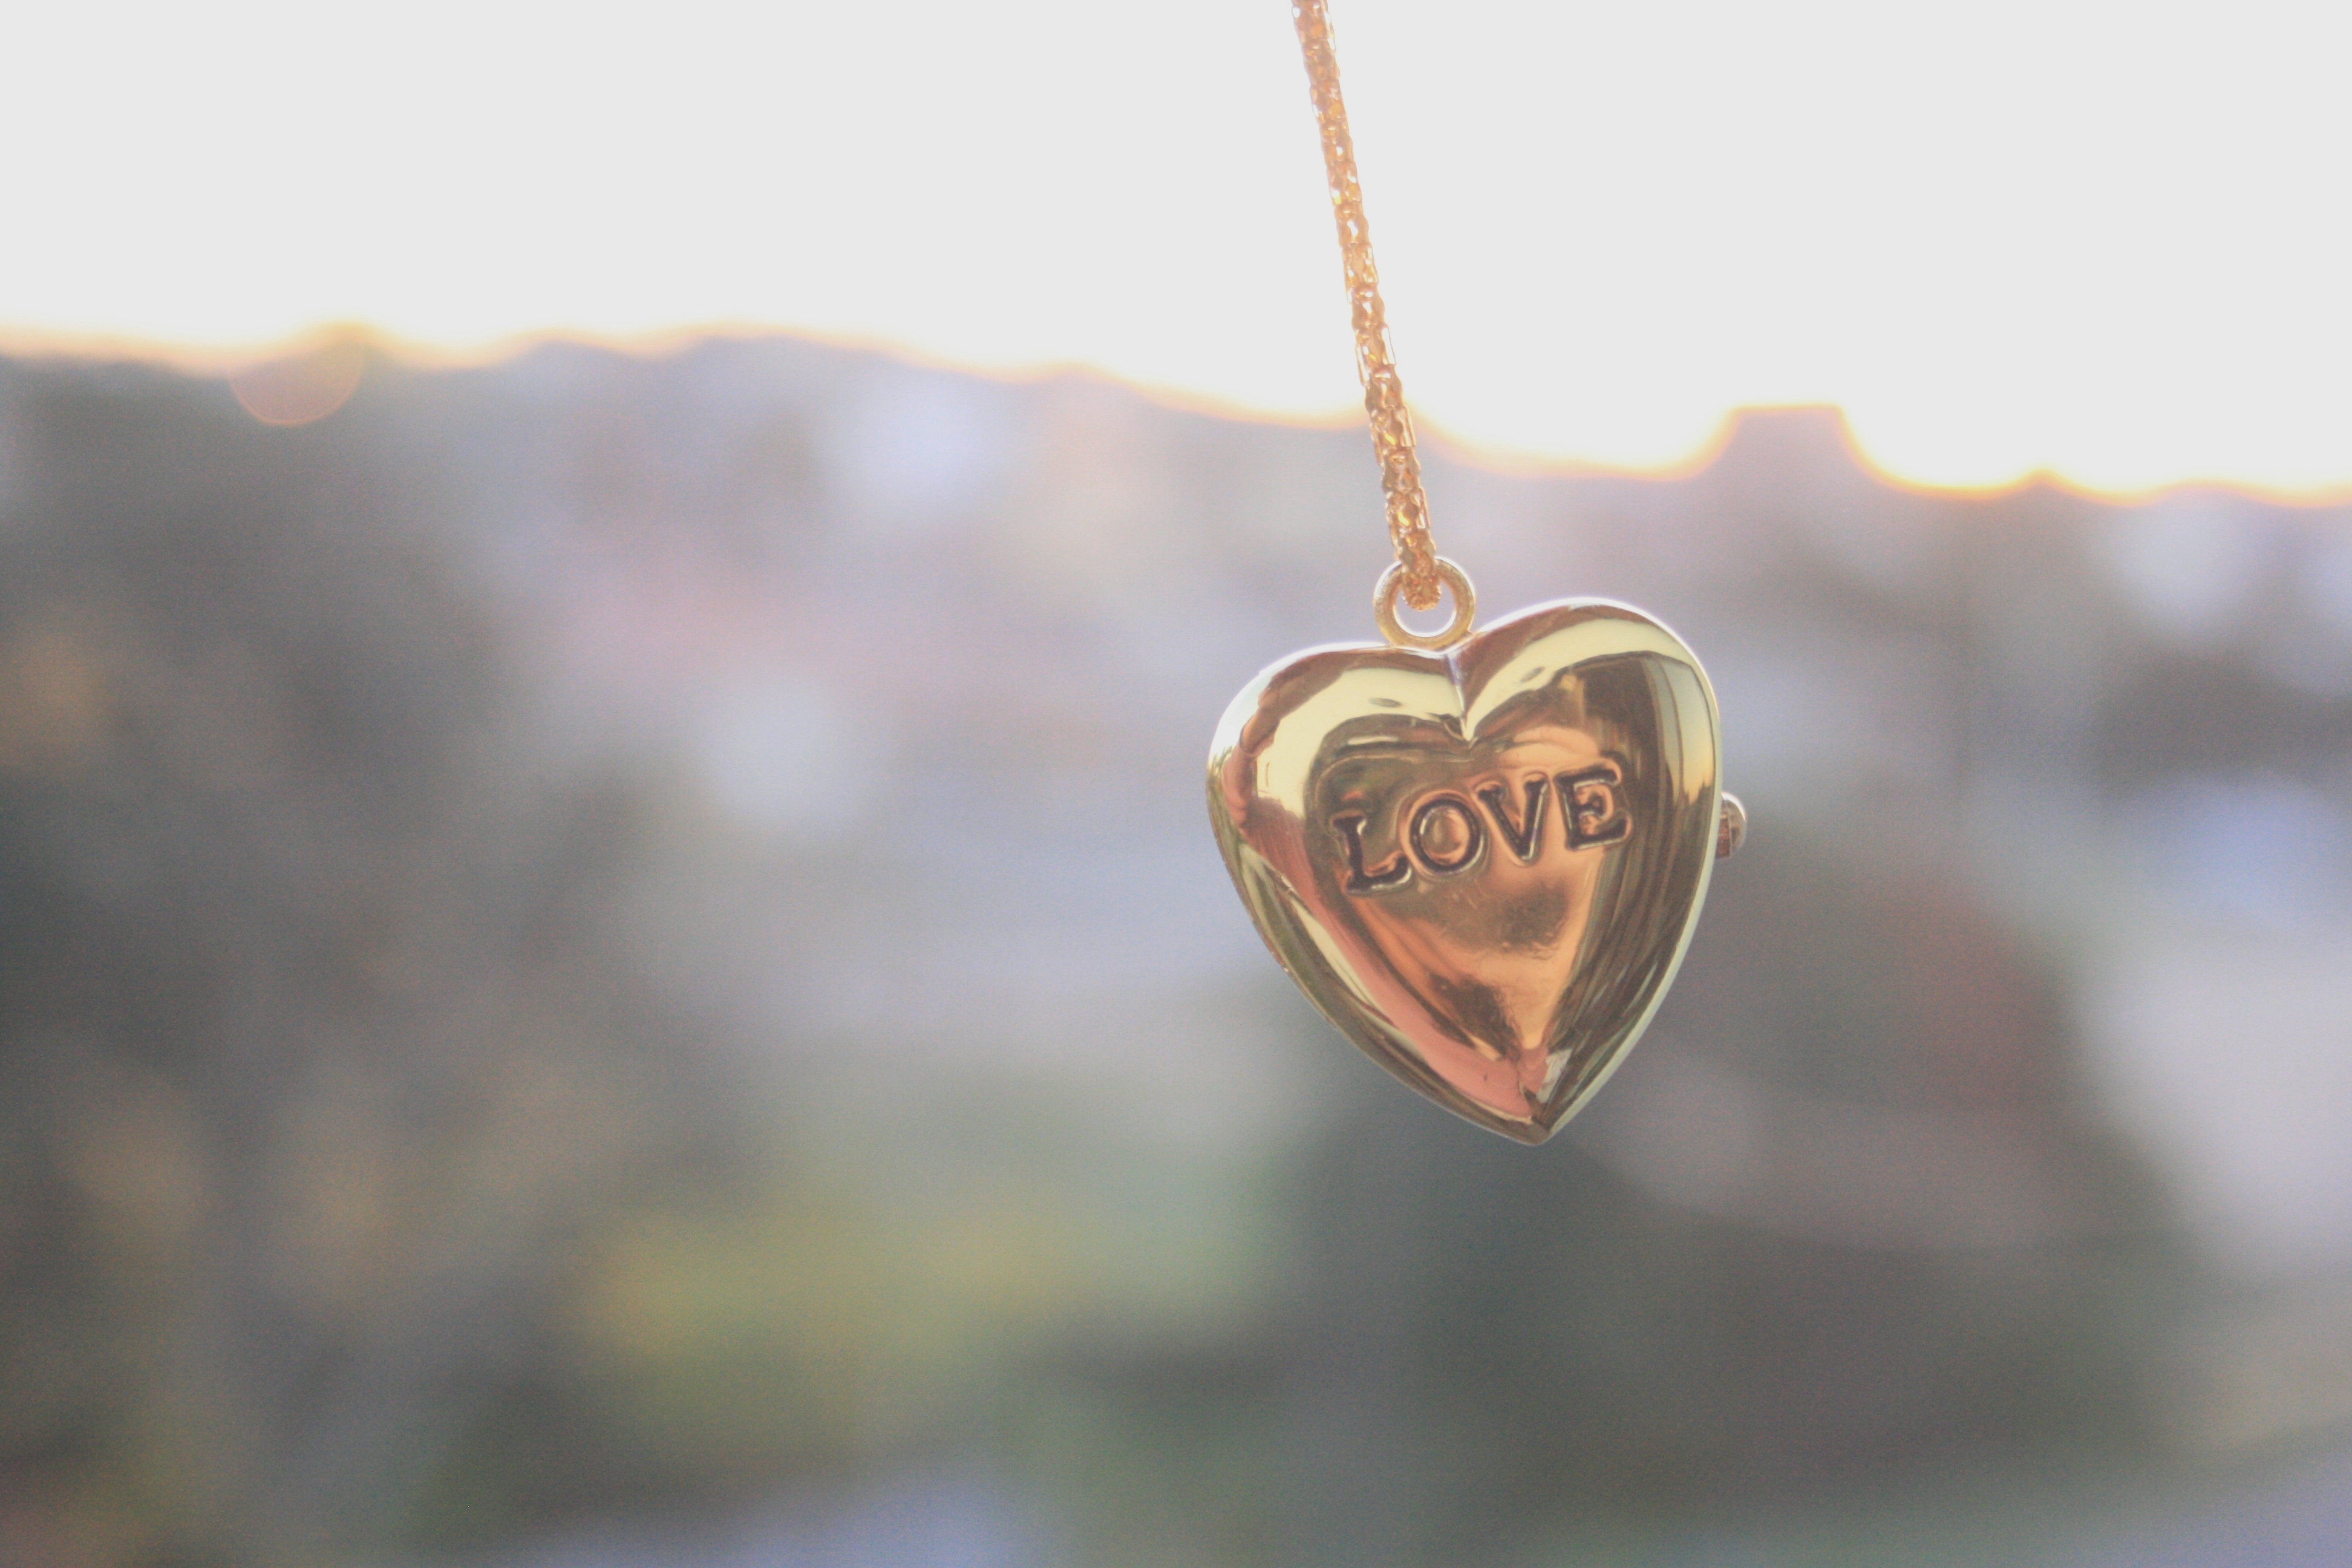 love, heart, decoration, mood, chain, pendant, coulomb, accessory, serdetschko